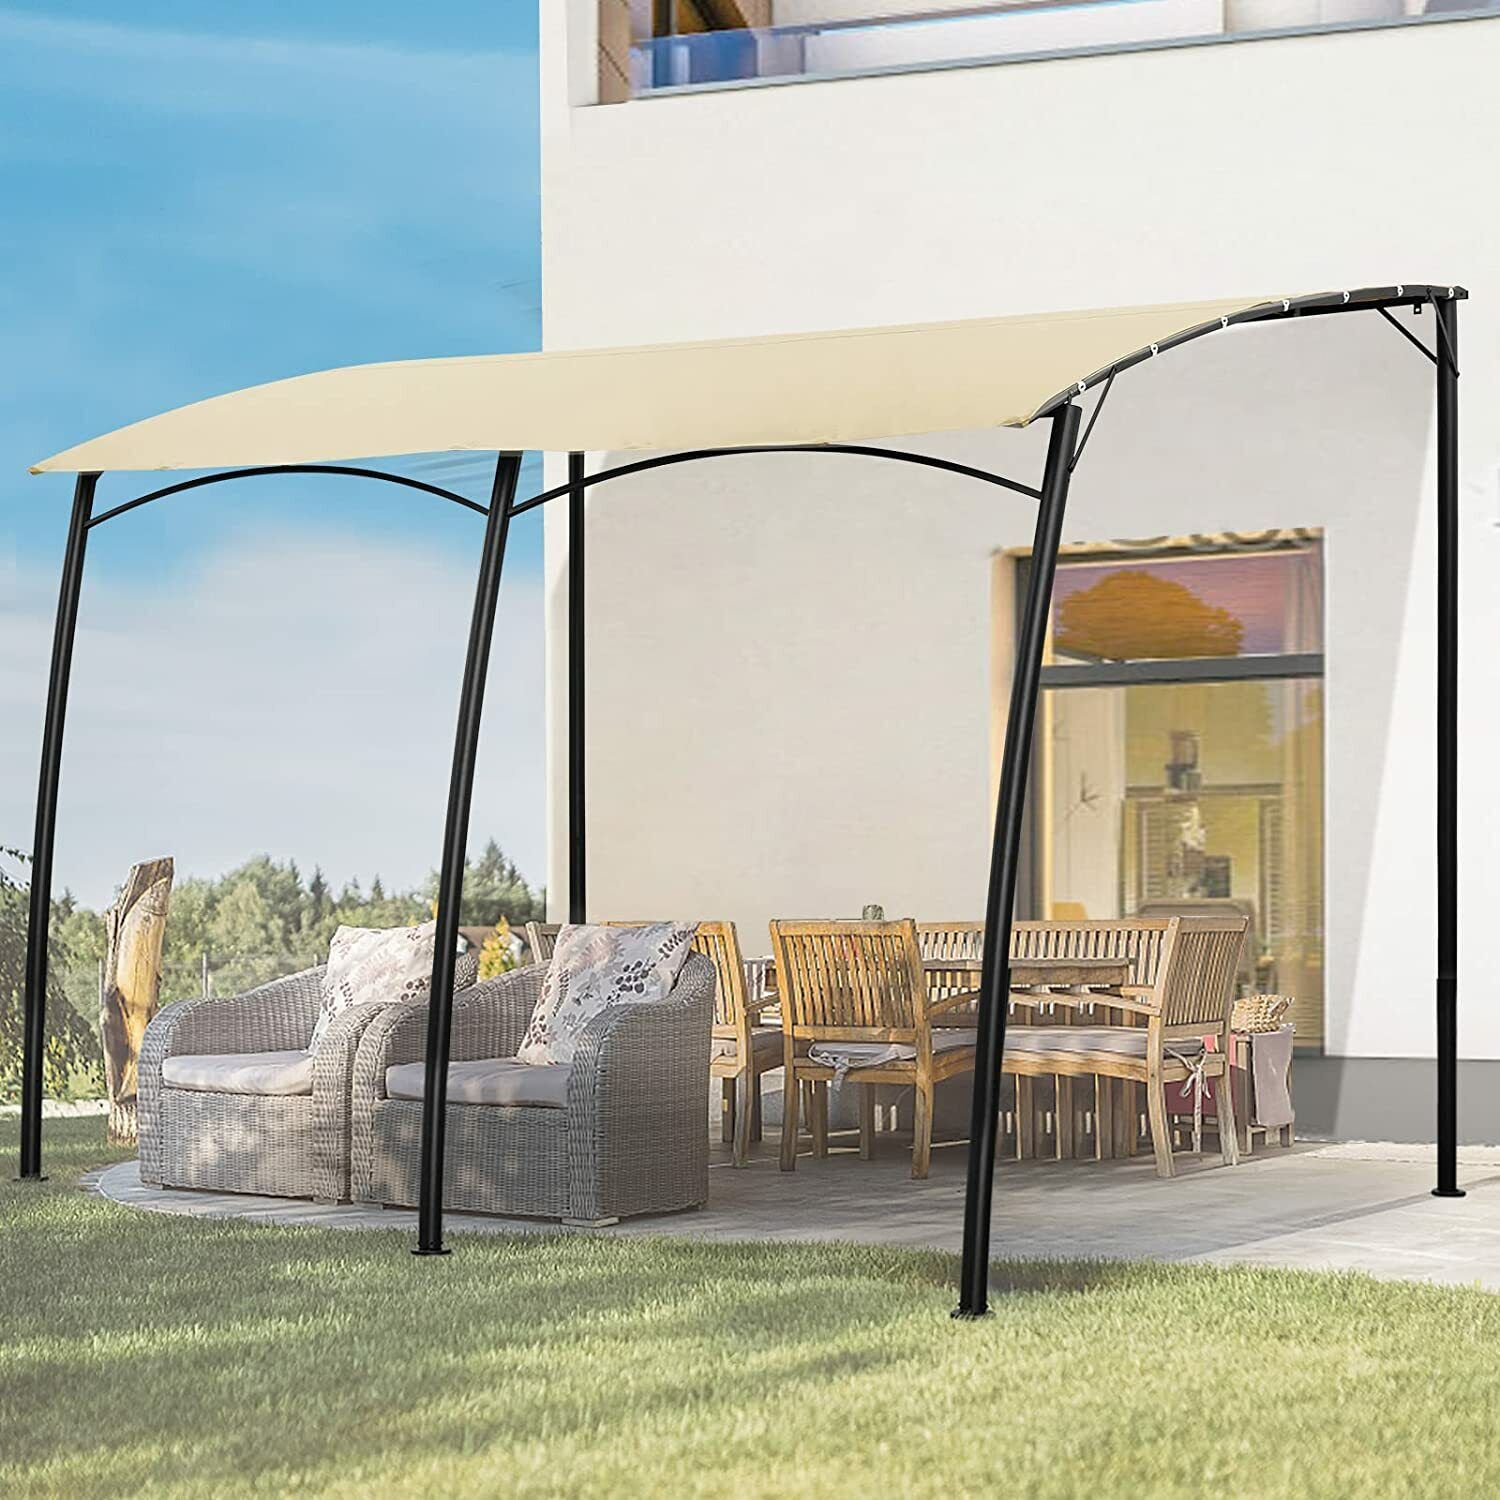 13' x 10' Steel Outdoor Pergola Gazebo Patio Awning Gazebo Garden Deck Canopy